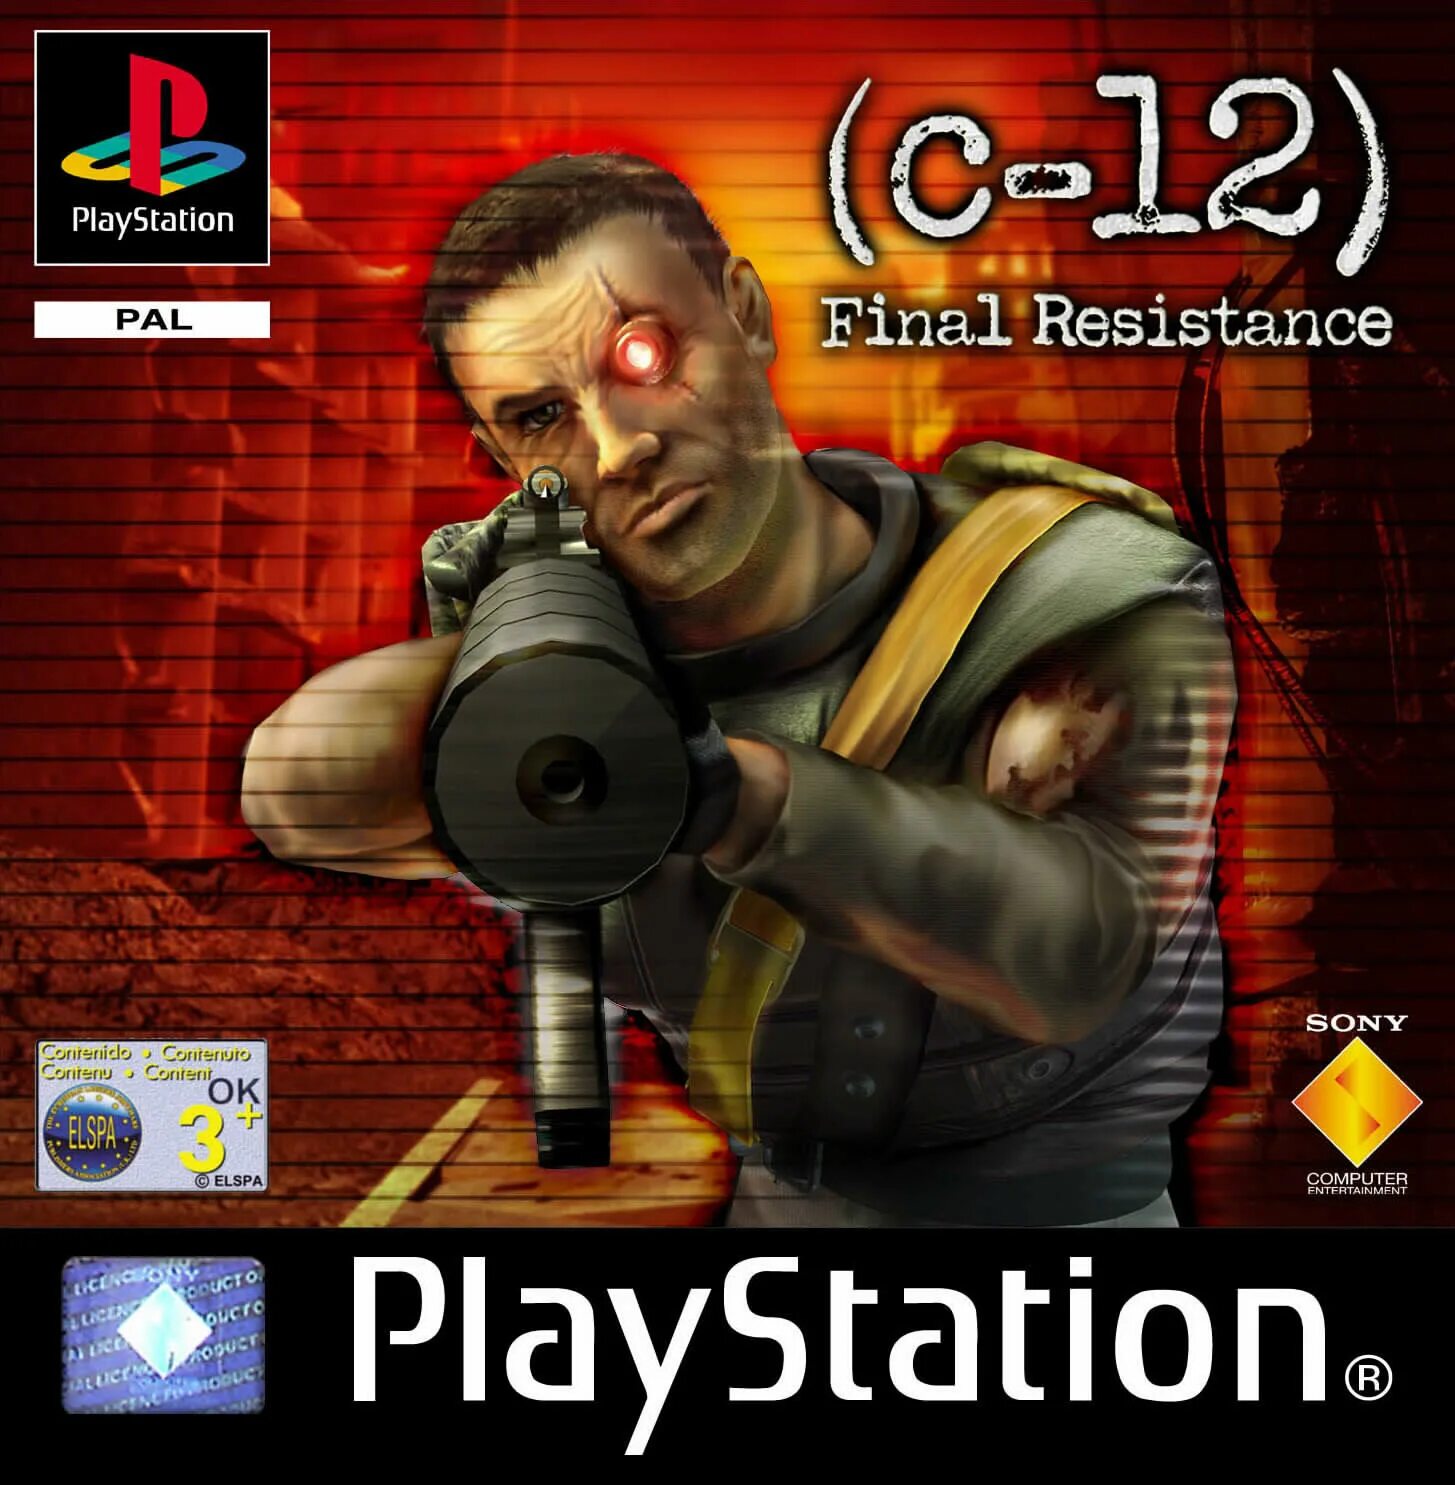 PLAYSTATION 1 c12 Final Resistance. C-12: Final Resistance. C-12 ps1. C-12 Final Resistance обложка.